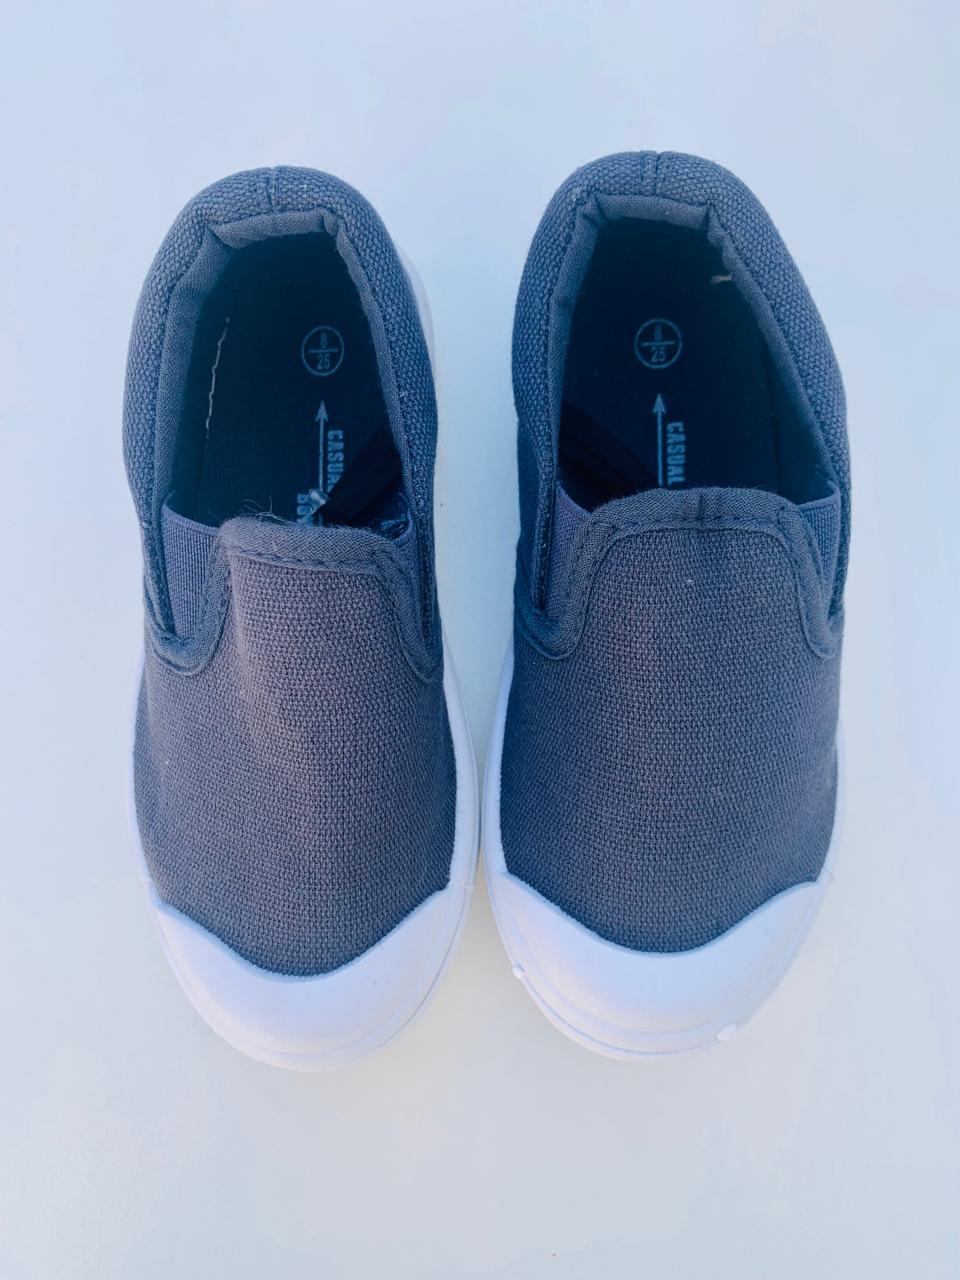 Matalan Navy Blue Sneakers